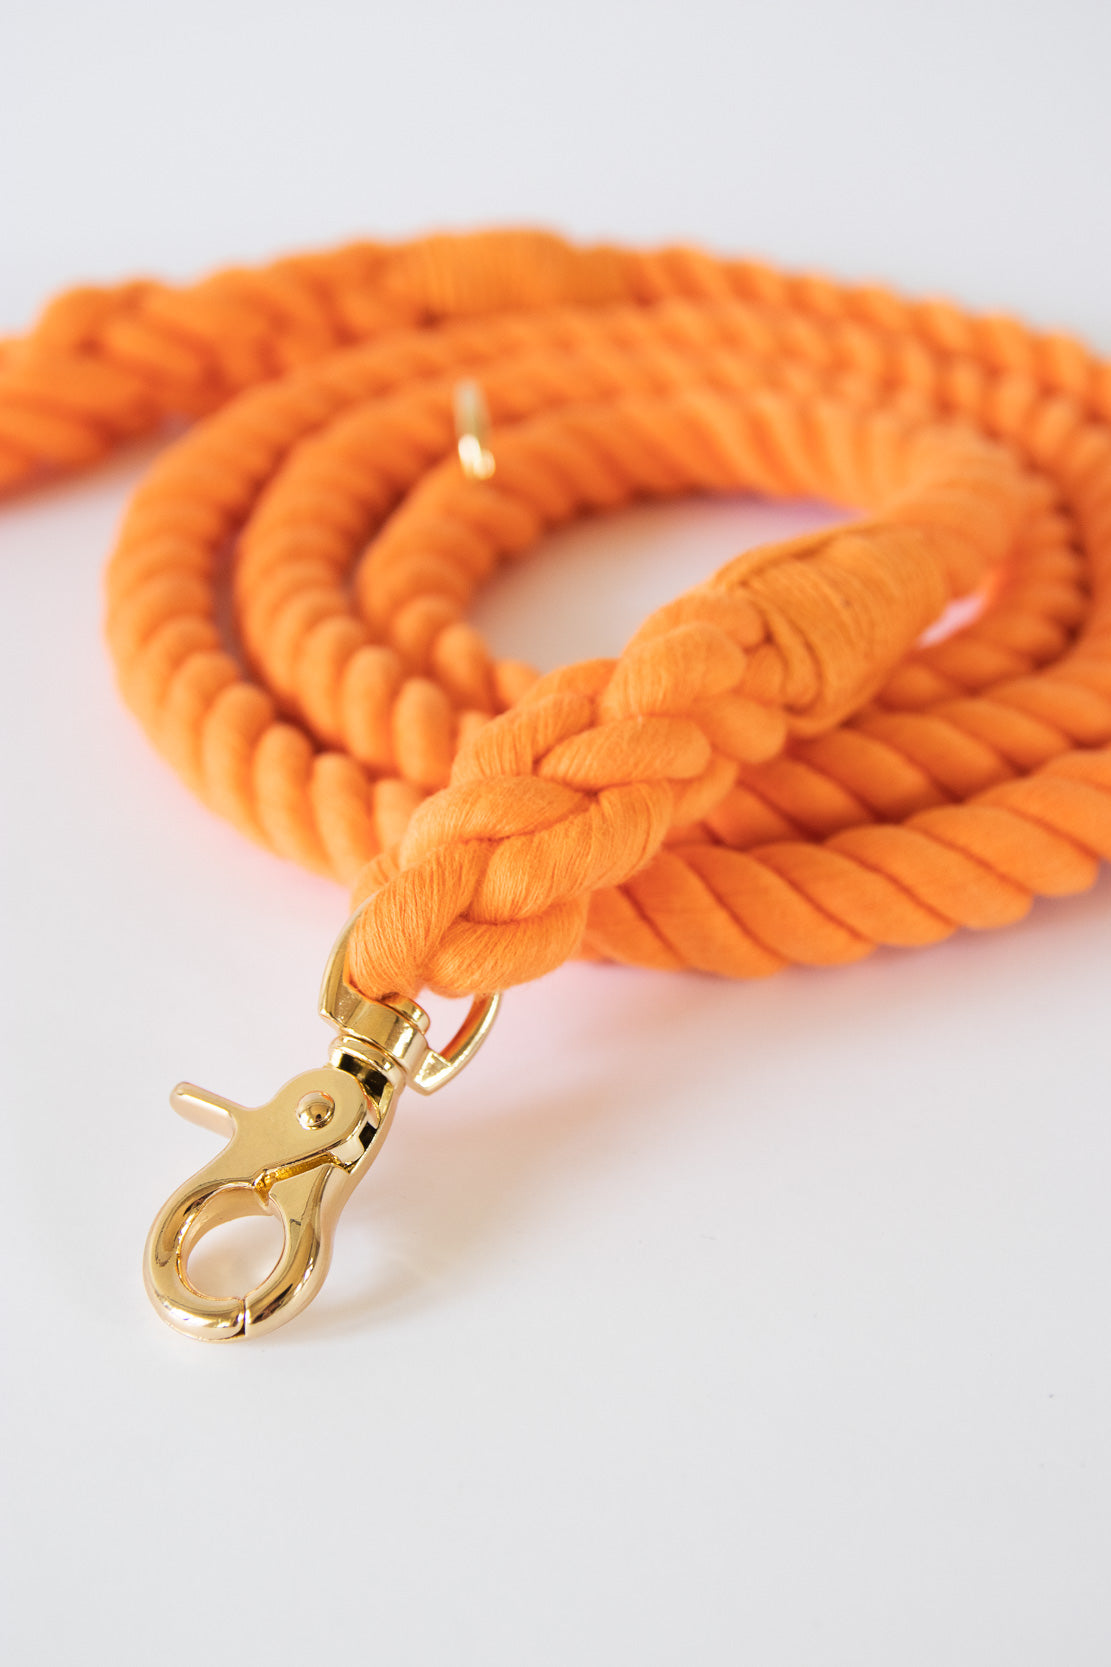 Peach Rope leash 180 cm long